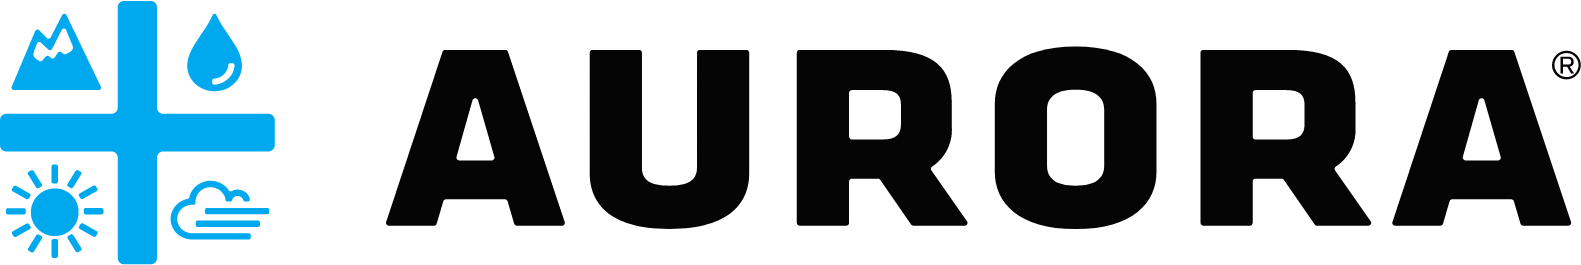 Aurora Cannabis logo large (transparent PNG)